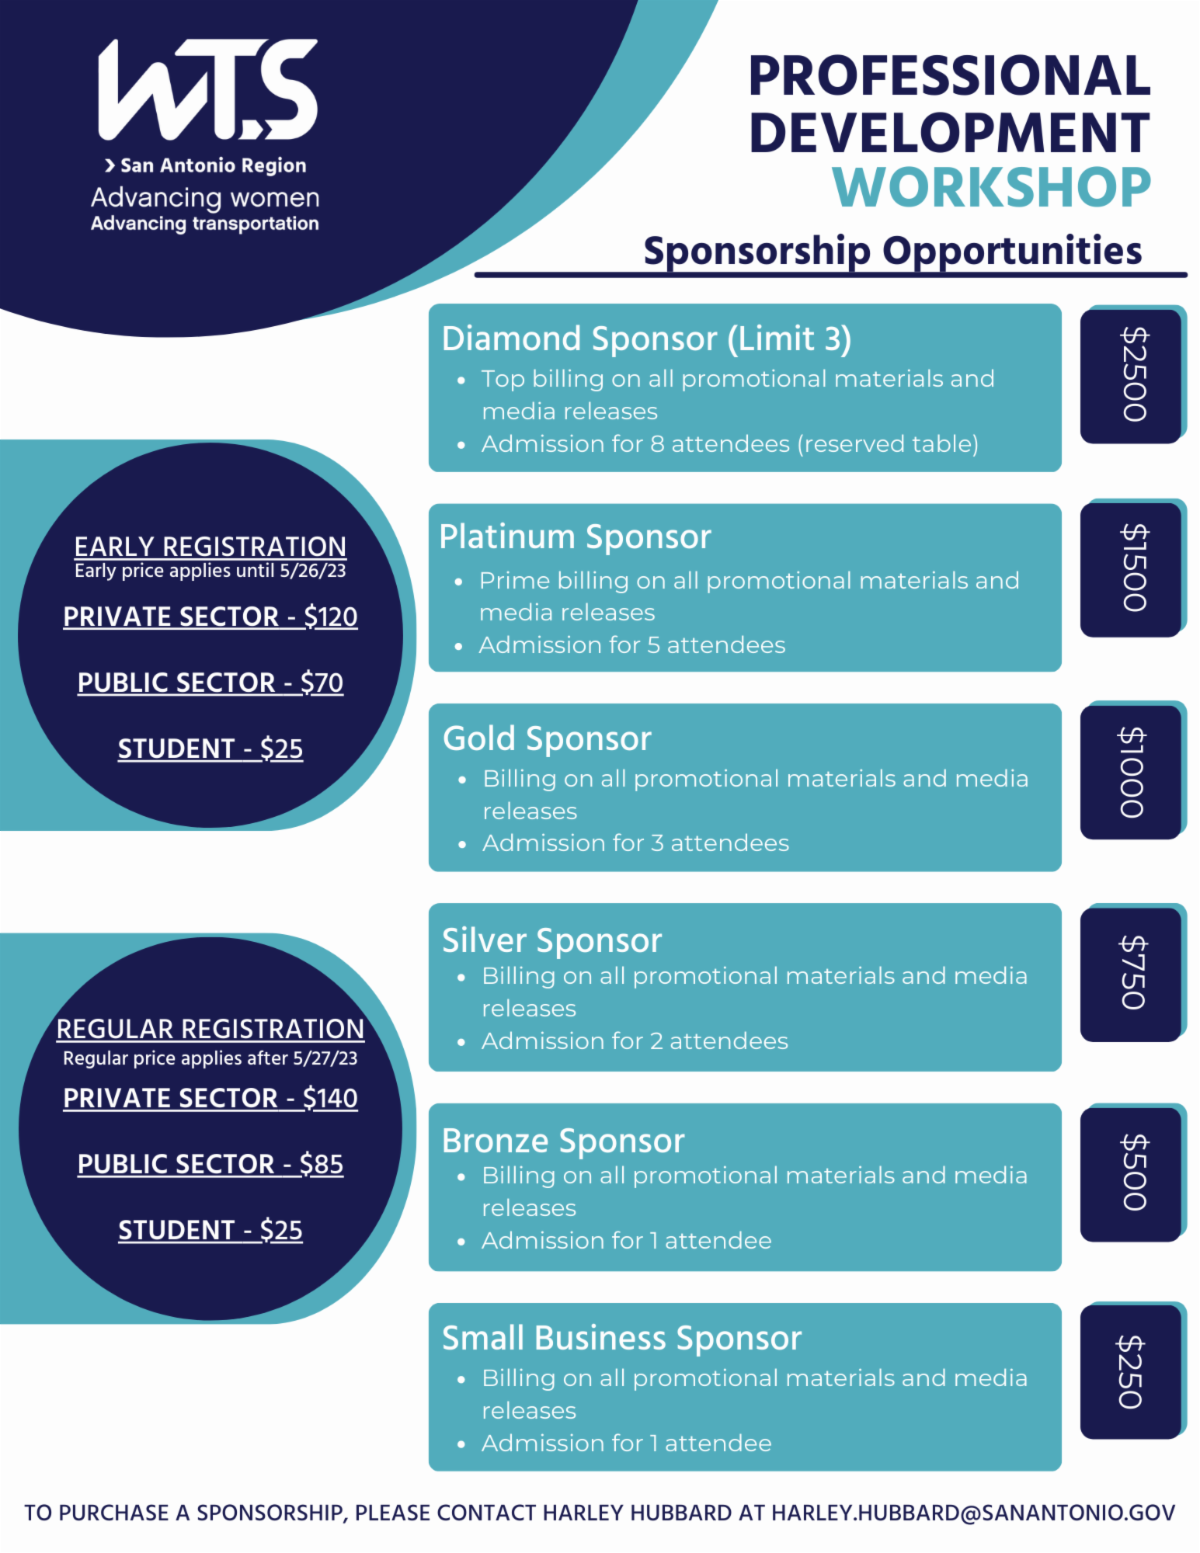 WTS SAR 2023 Professional Development Sponsorships